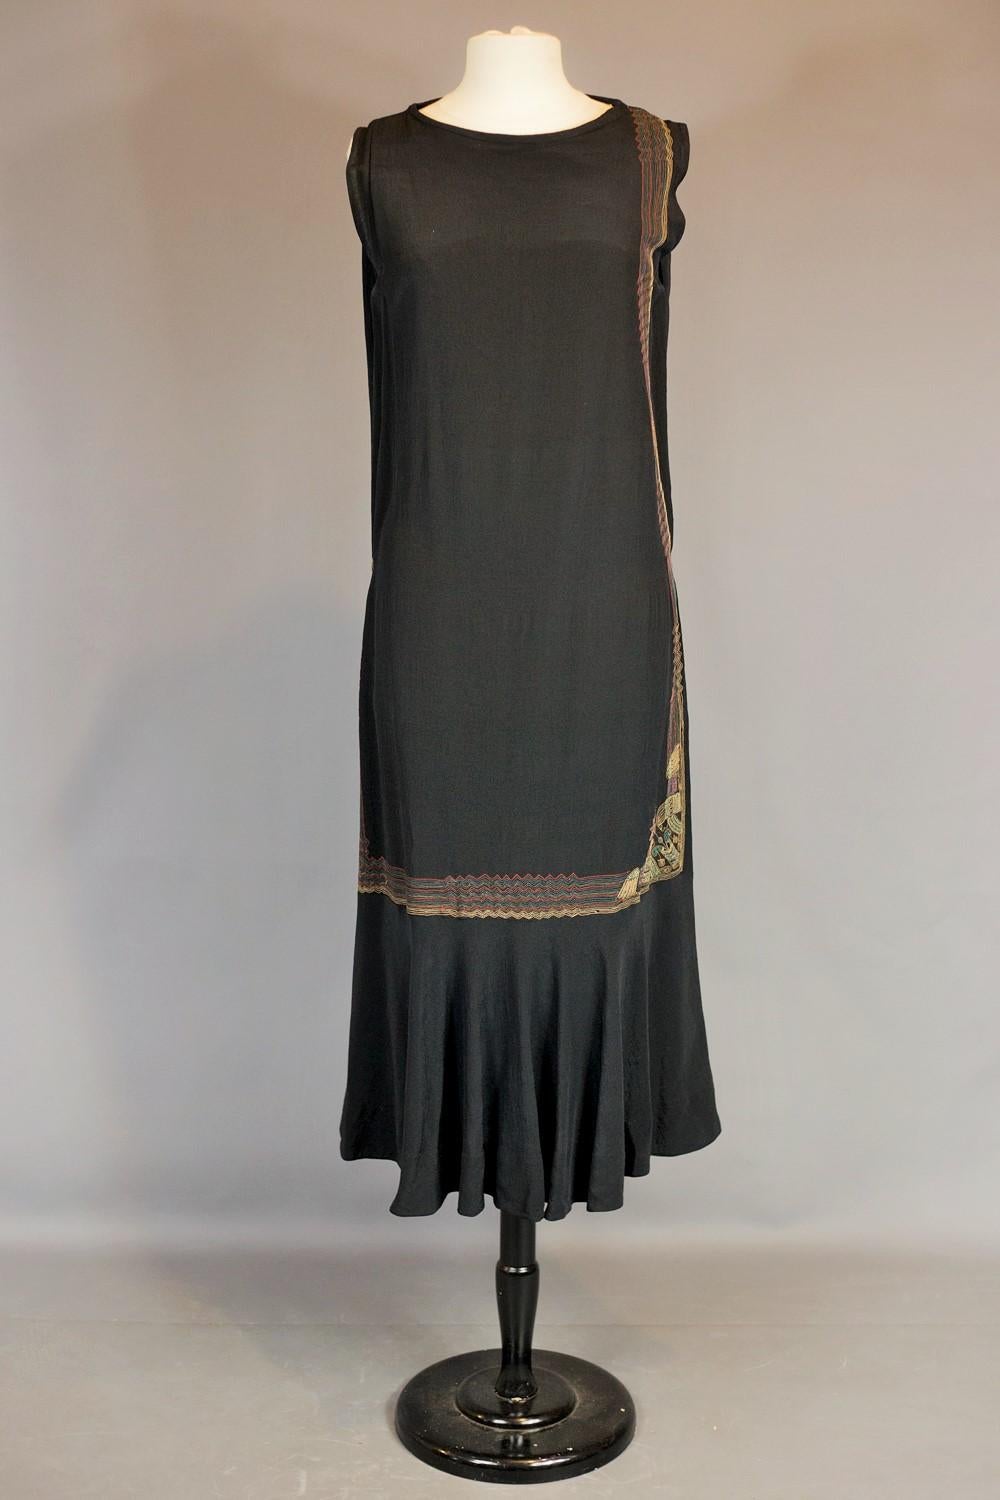 A French Egyptomania Dress In Embroidered Black Crepe silk- Circa 1930 For Sale 1